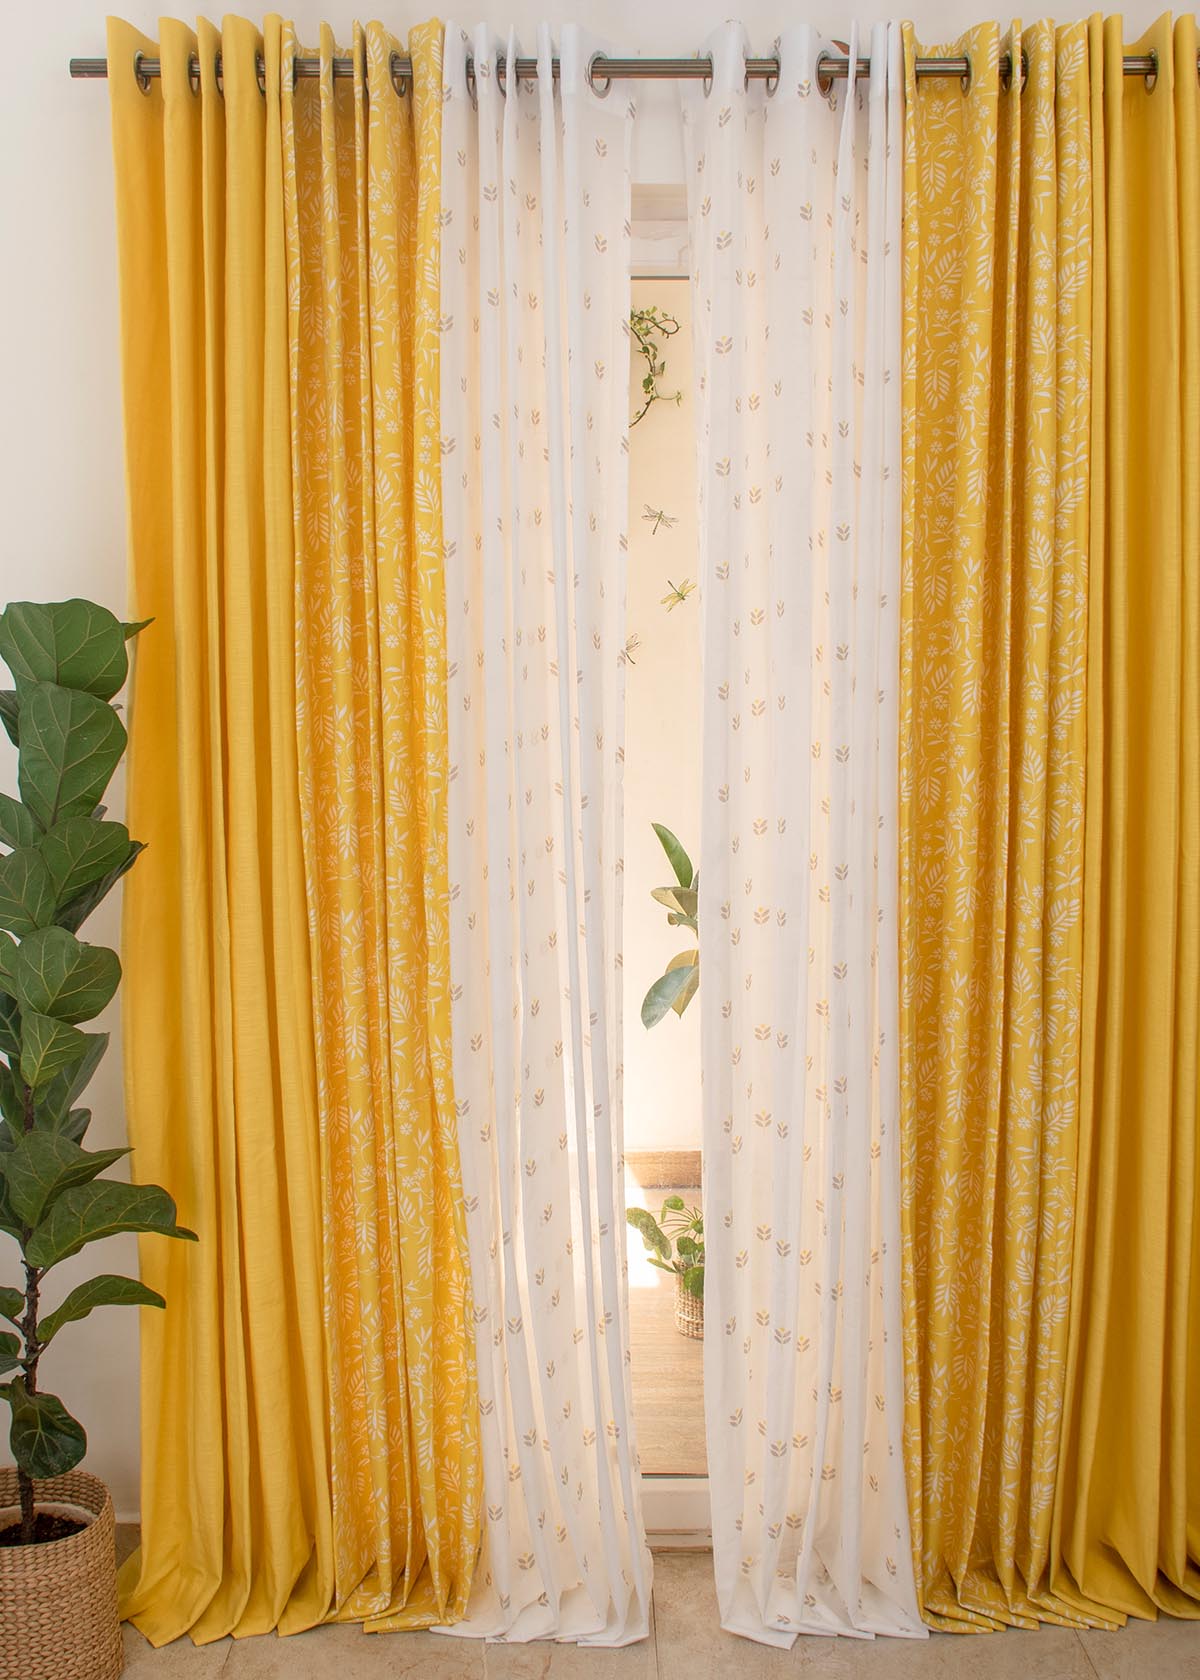 Primrose Yellow Solid,Yellow Daisy,Sapling Primrose Yellow Sheer Set Of 6 Combo Cotton Curtain - Yellow